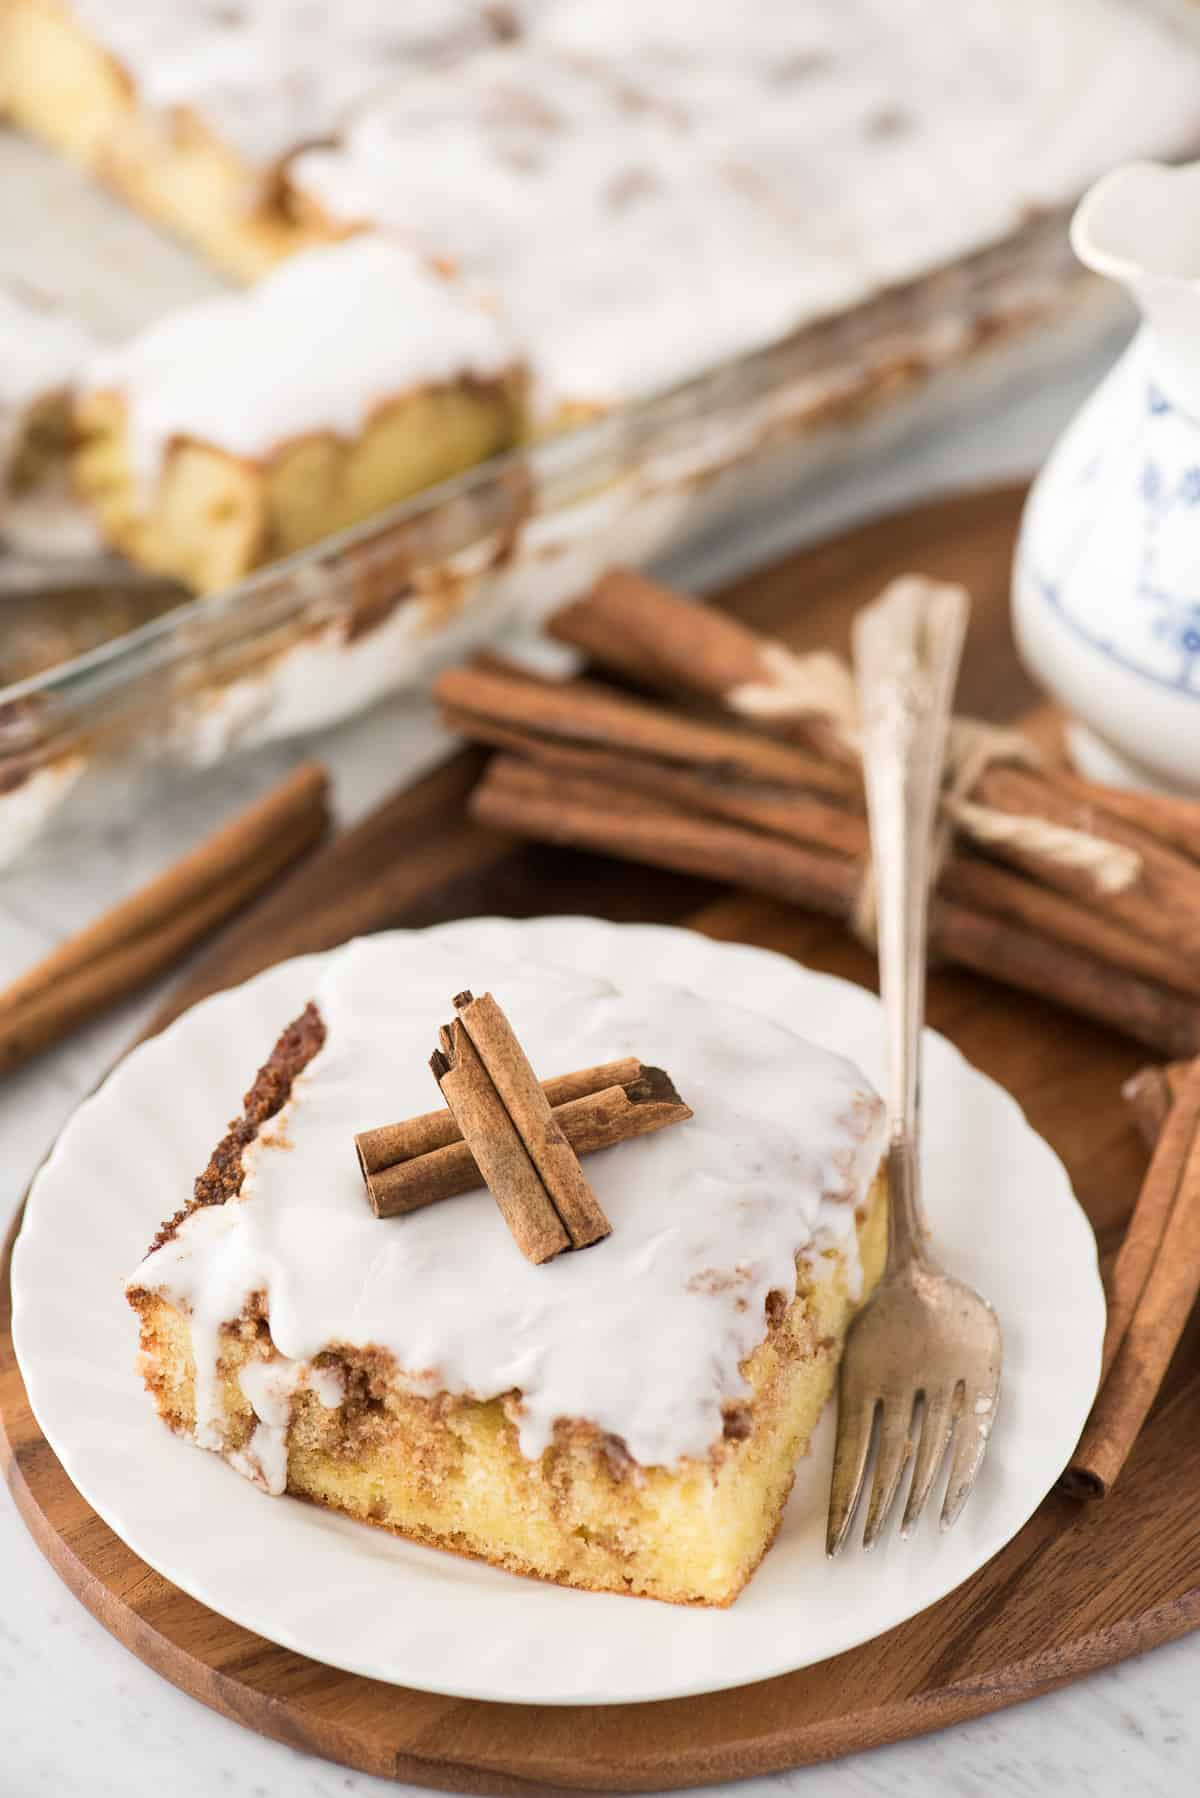 Honey bun cake on white plate, garnished with cinnamon sticks